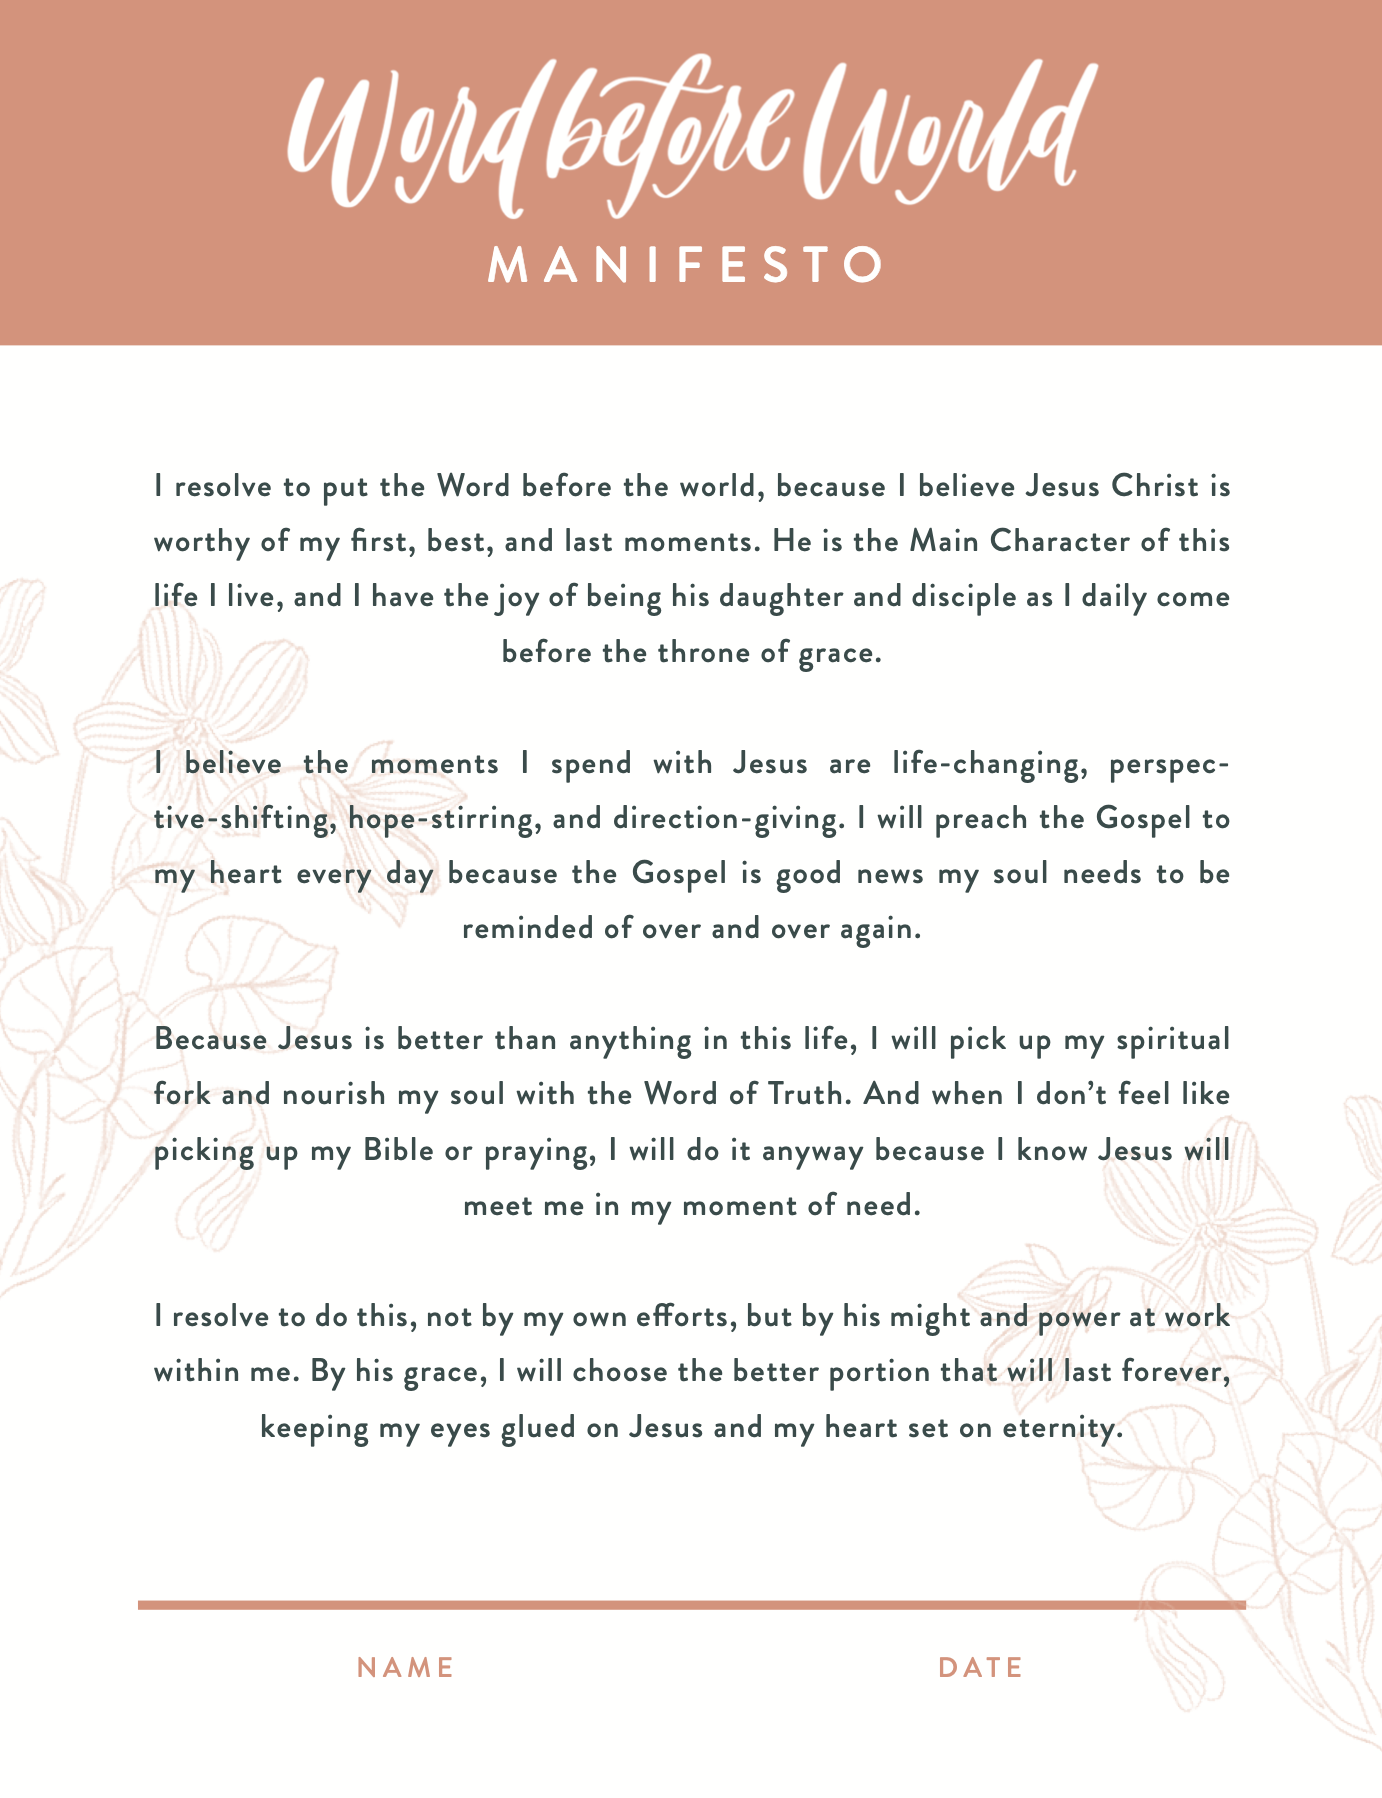 WBW Manifesto